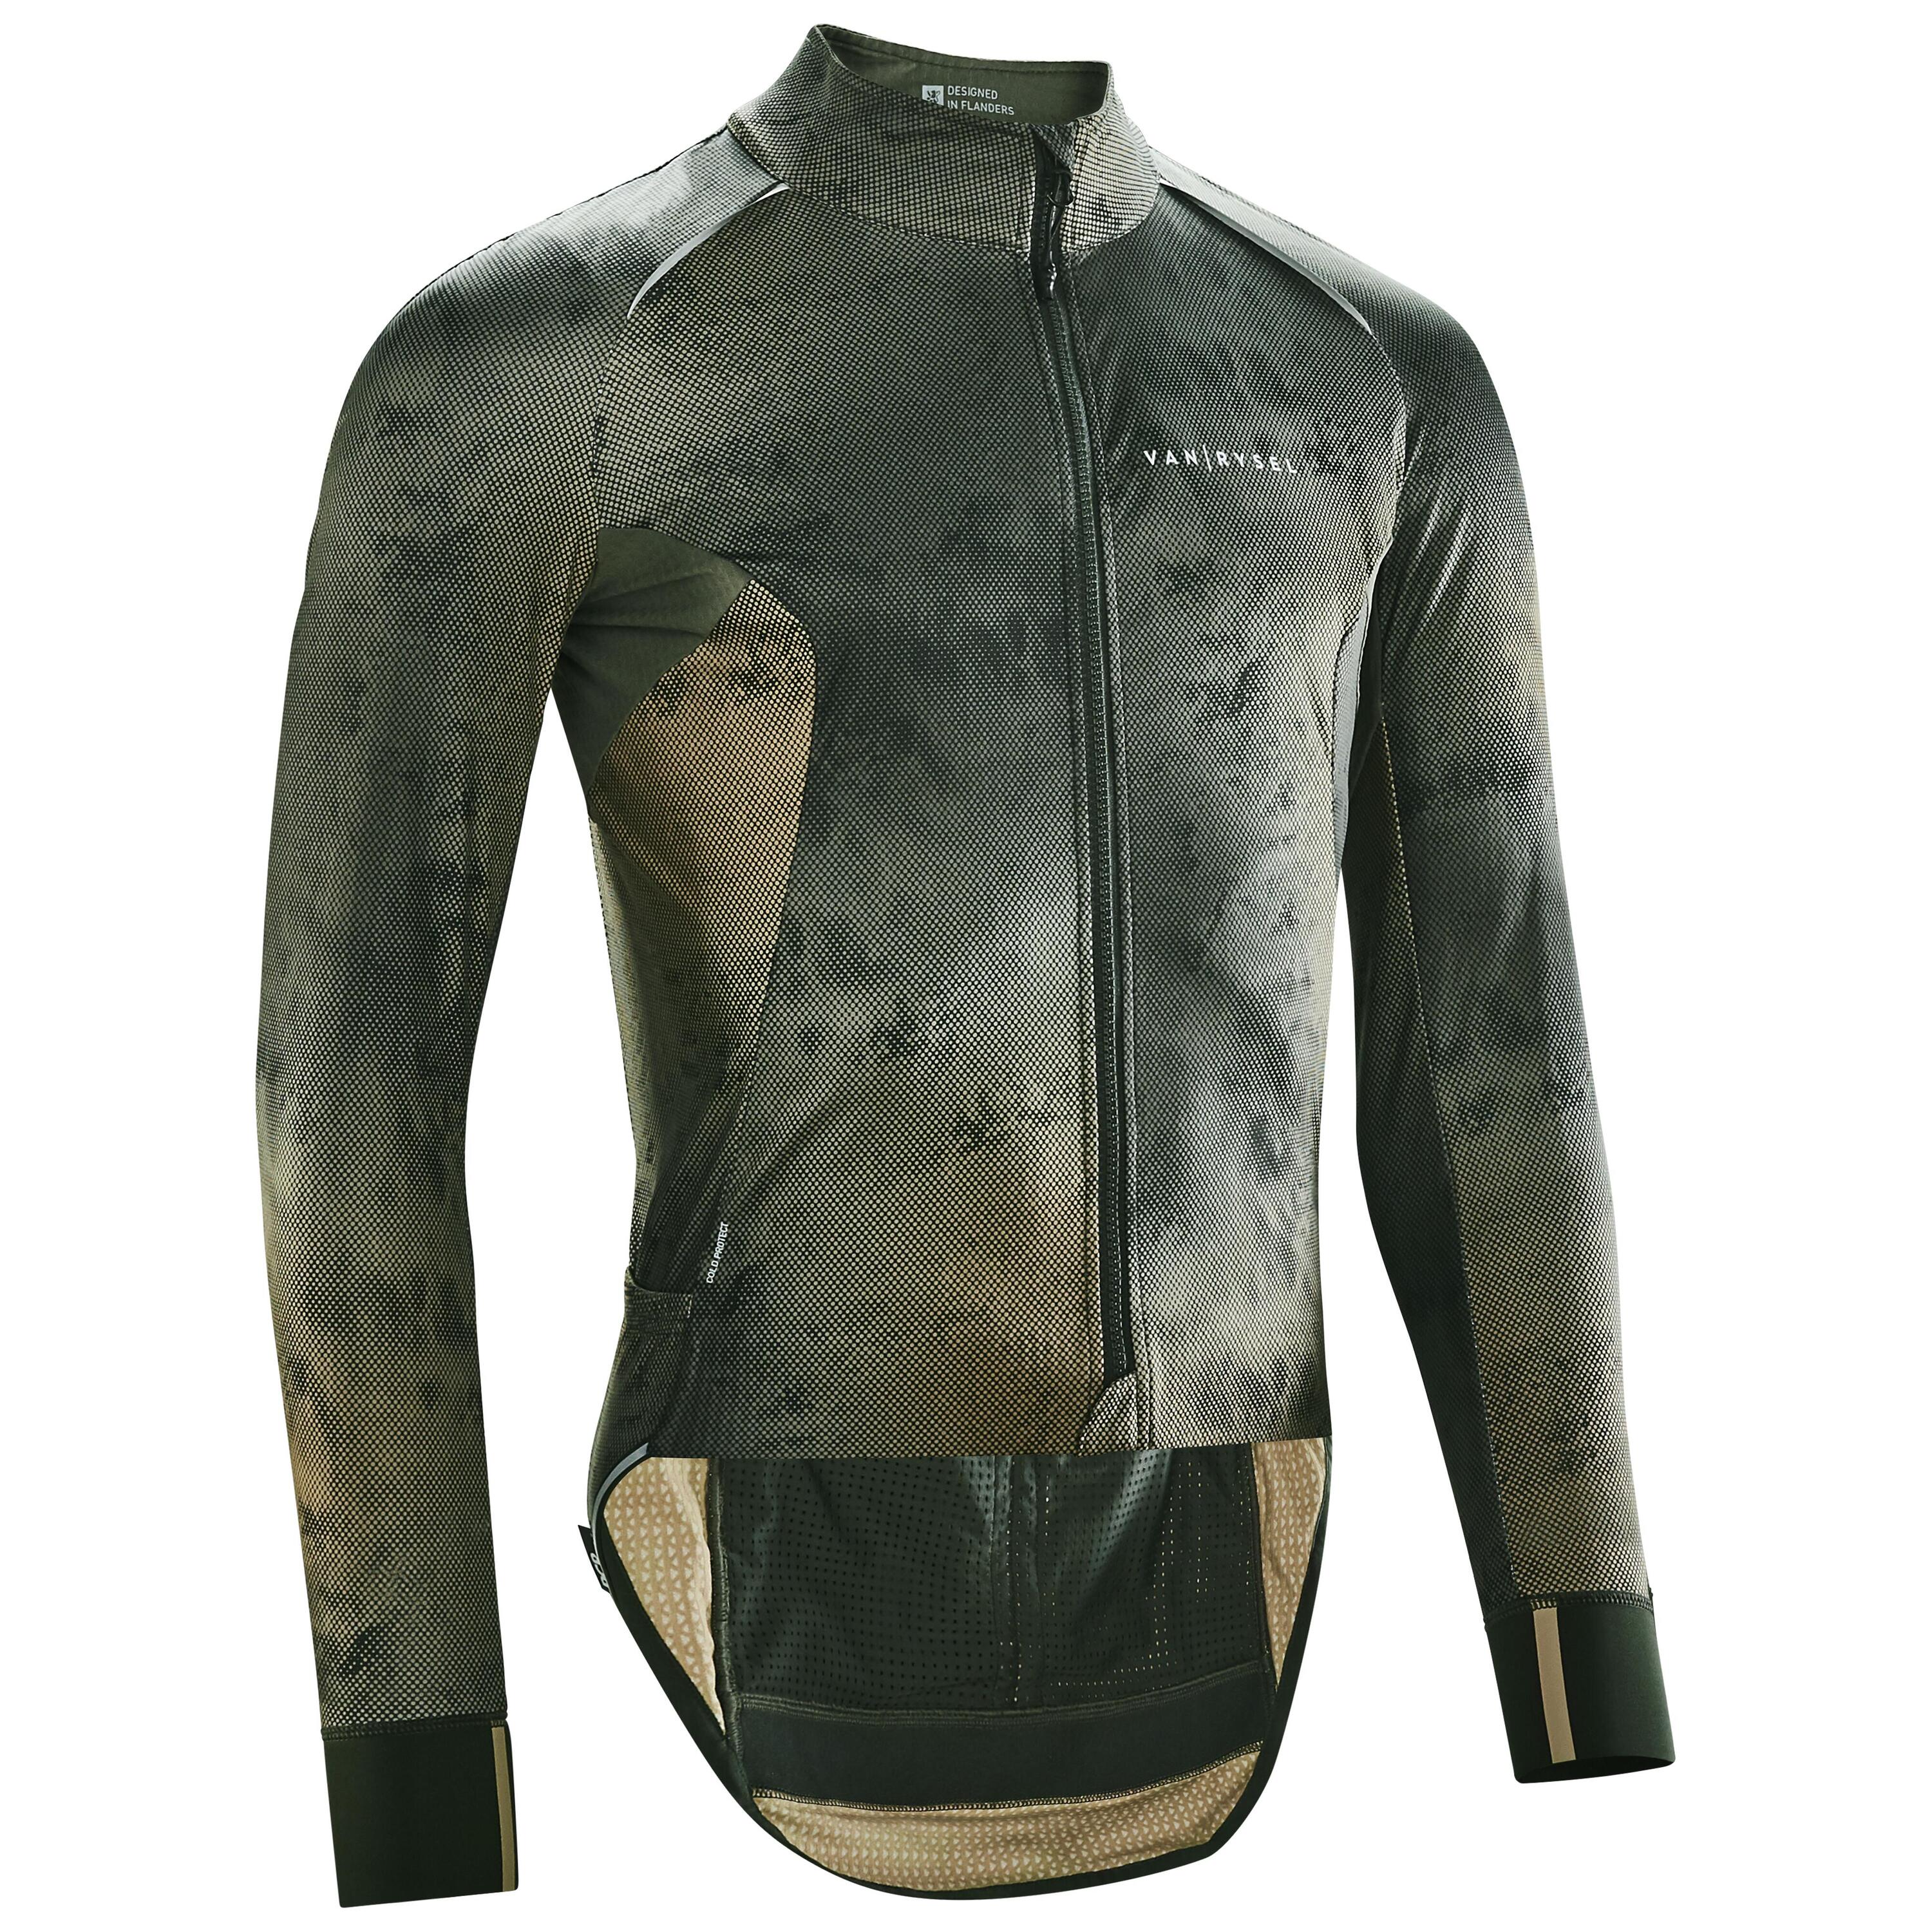 VAN RYSEL Men's Long-Sleeved Road Cycling Winter Jacket Racer - Camo